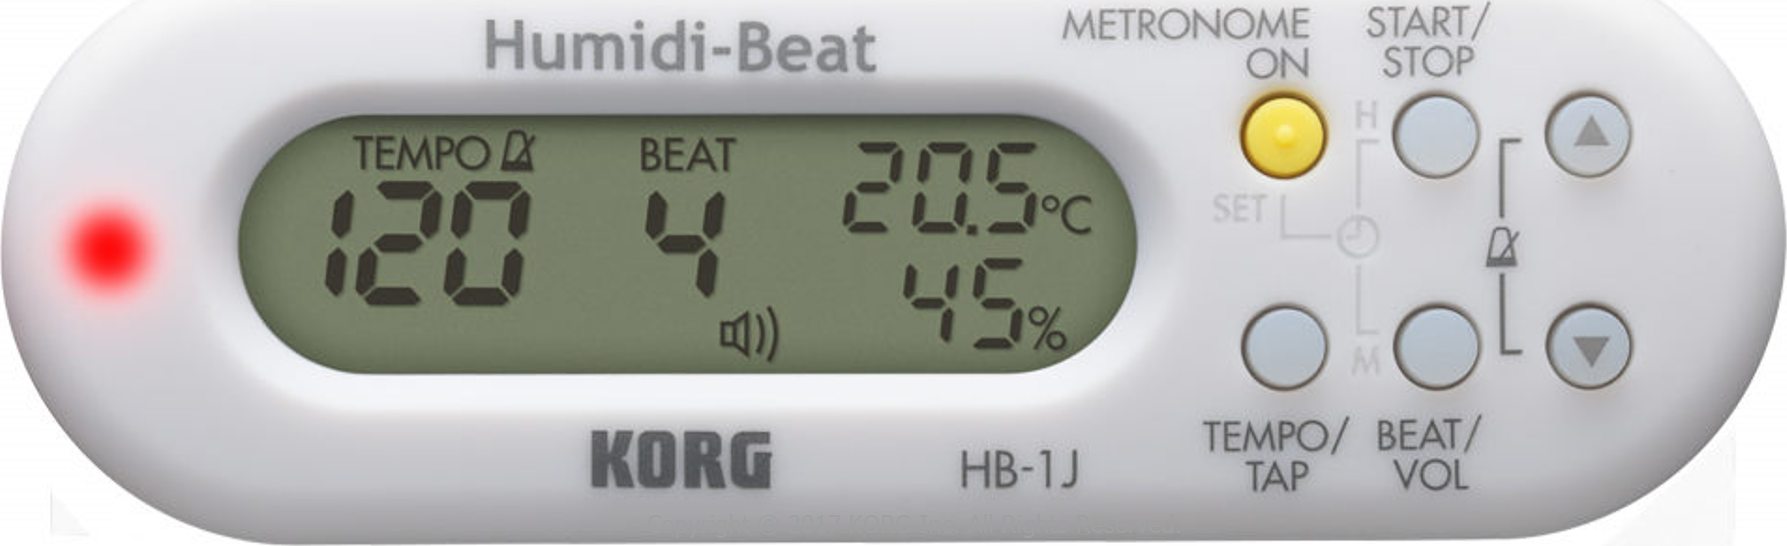 Korg Humidi-beat Metronome With Humidity Temperature Detector White - Guitar tuner - Main picture